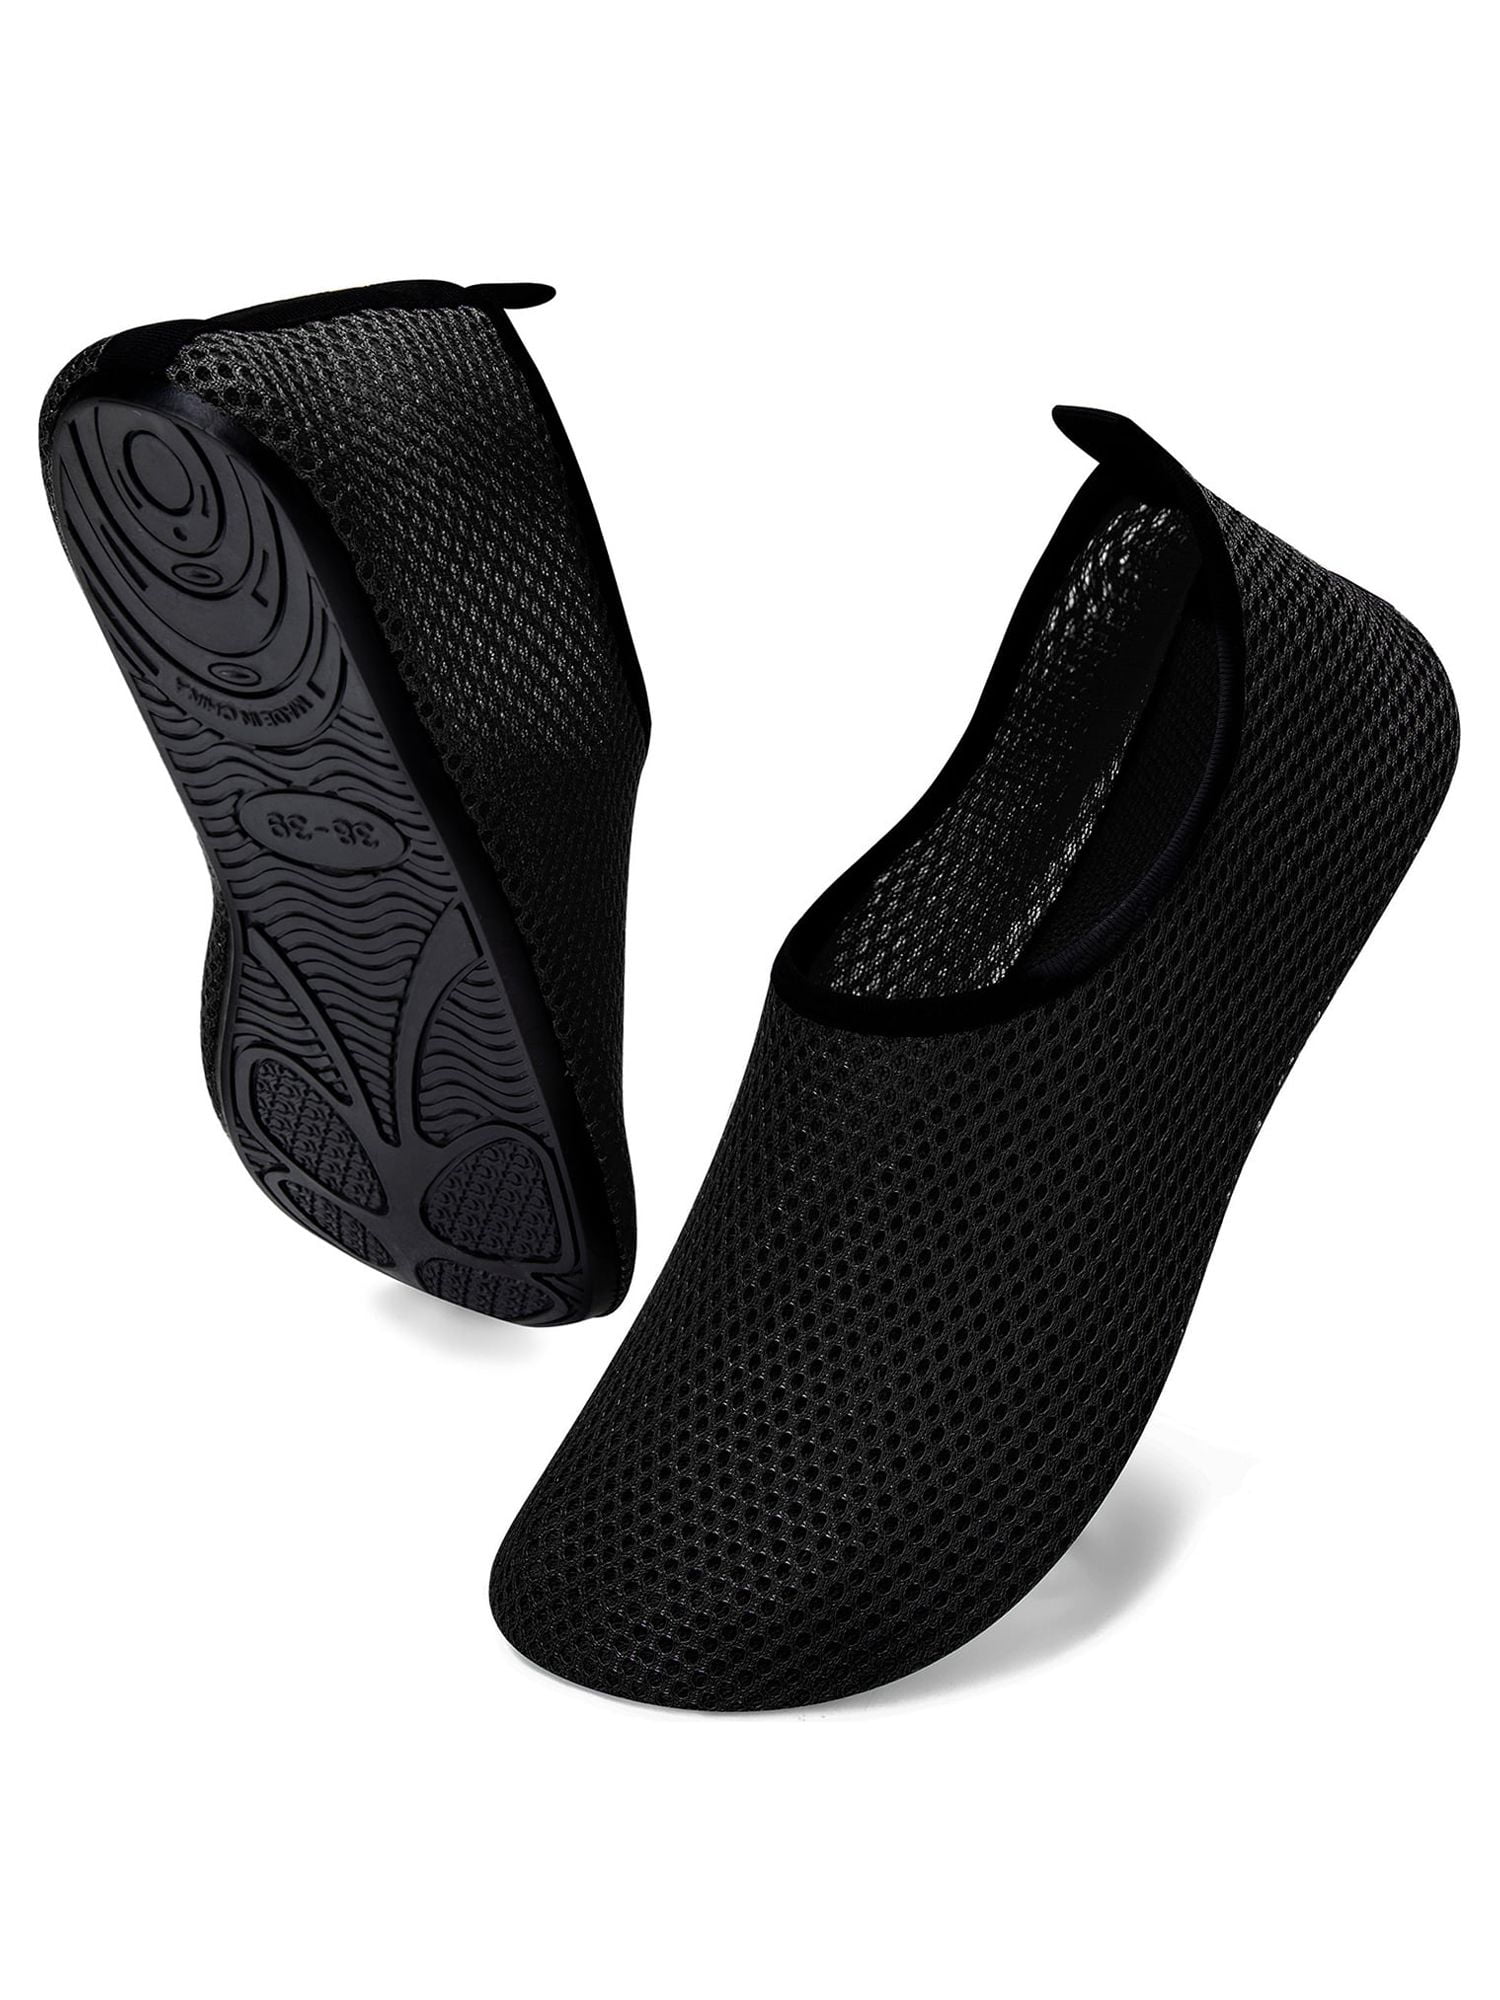 VIFUUR Water Sports Shoes Barefoot Quick-Dry Aqua Yoga Socks Slip-on for  Men Women Black, 5.5-6.5 Women/4.5-5.5 Men 